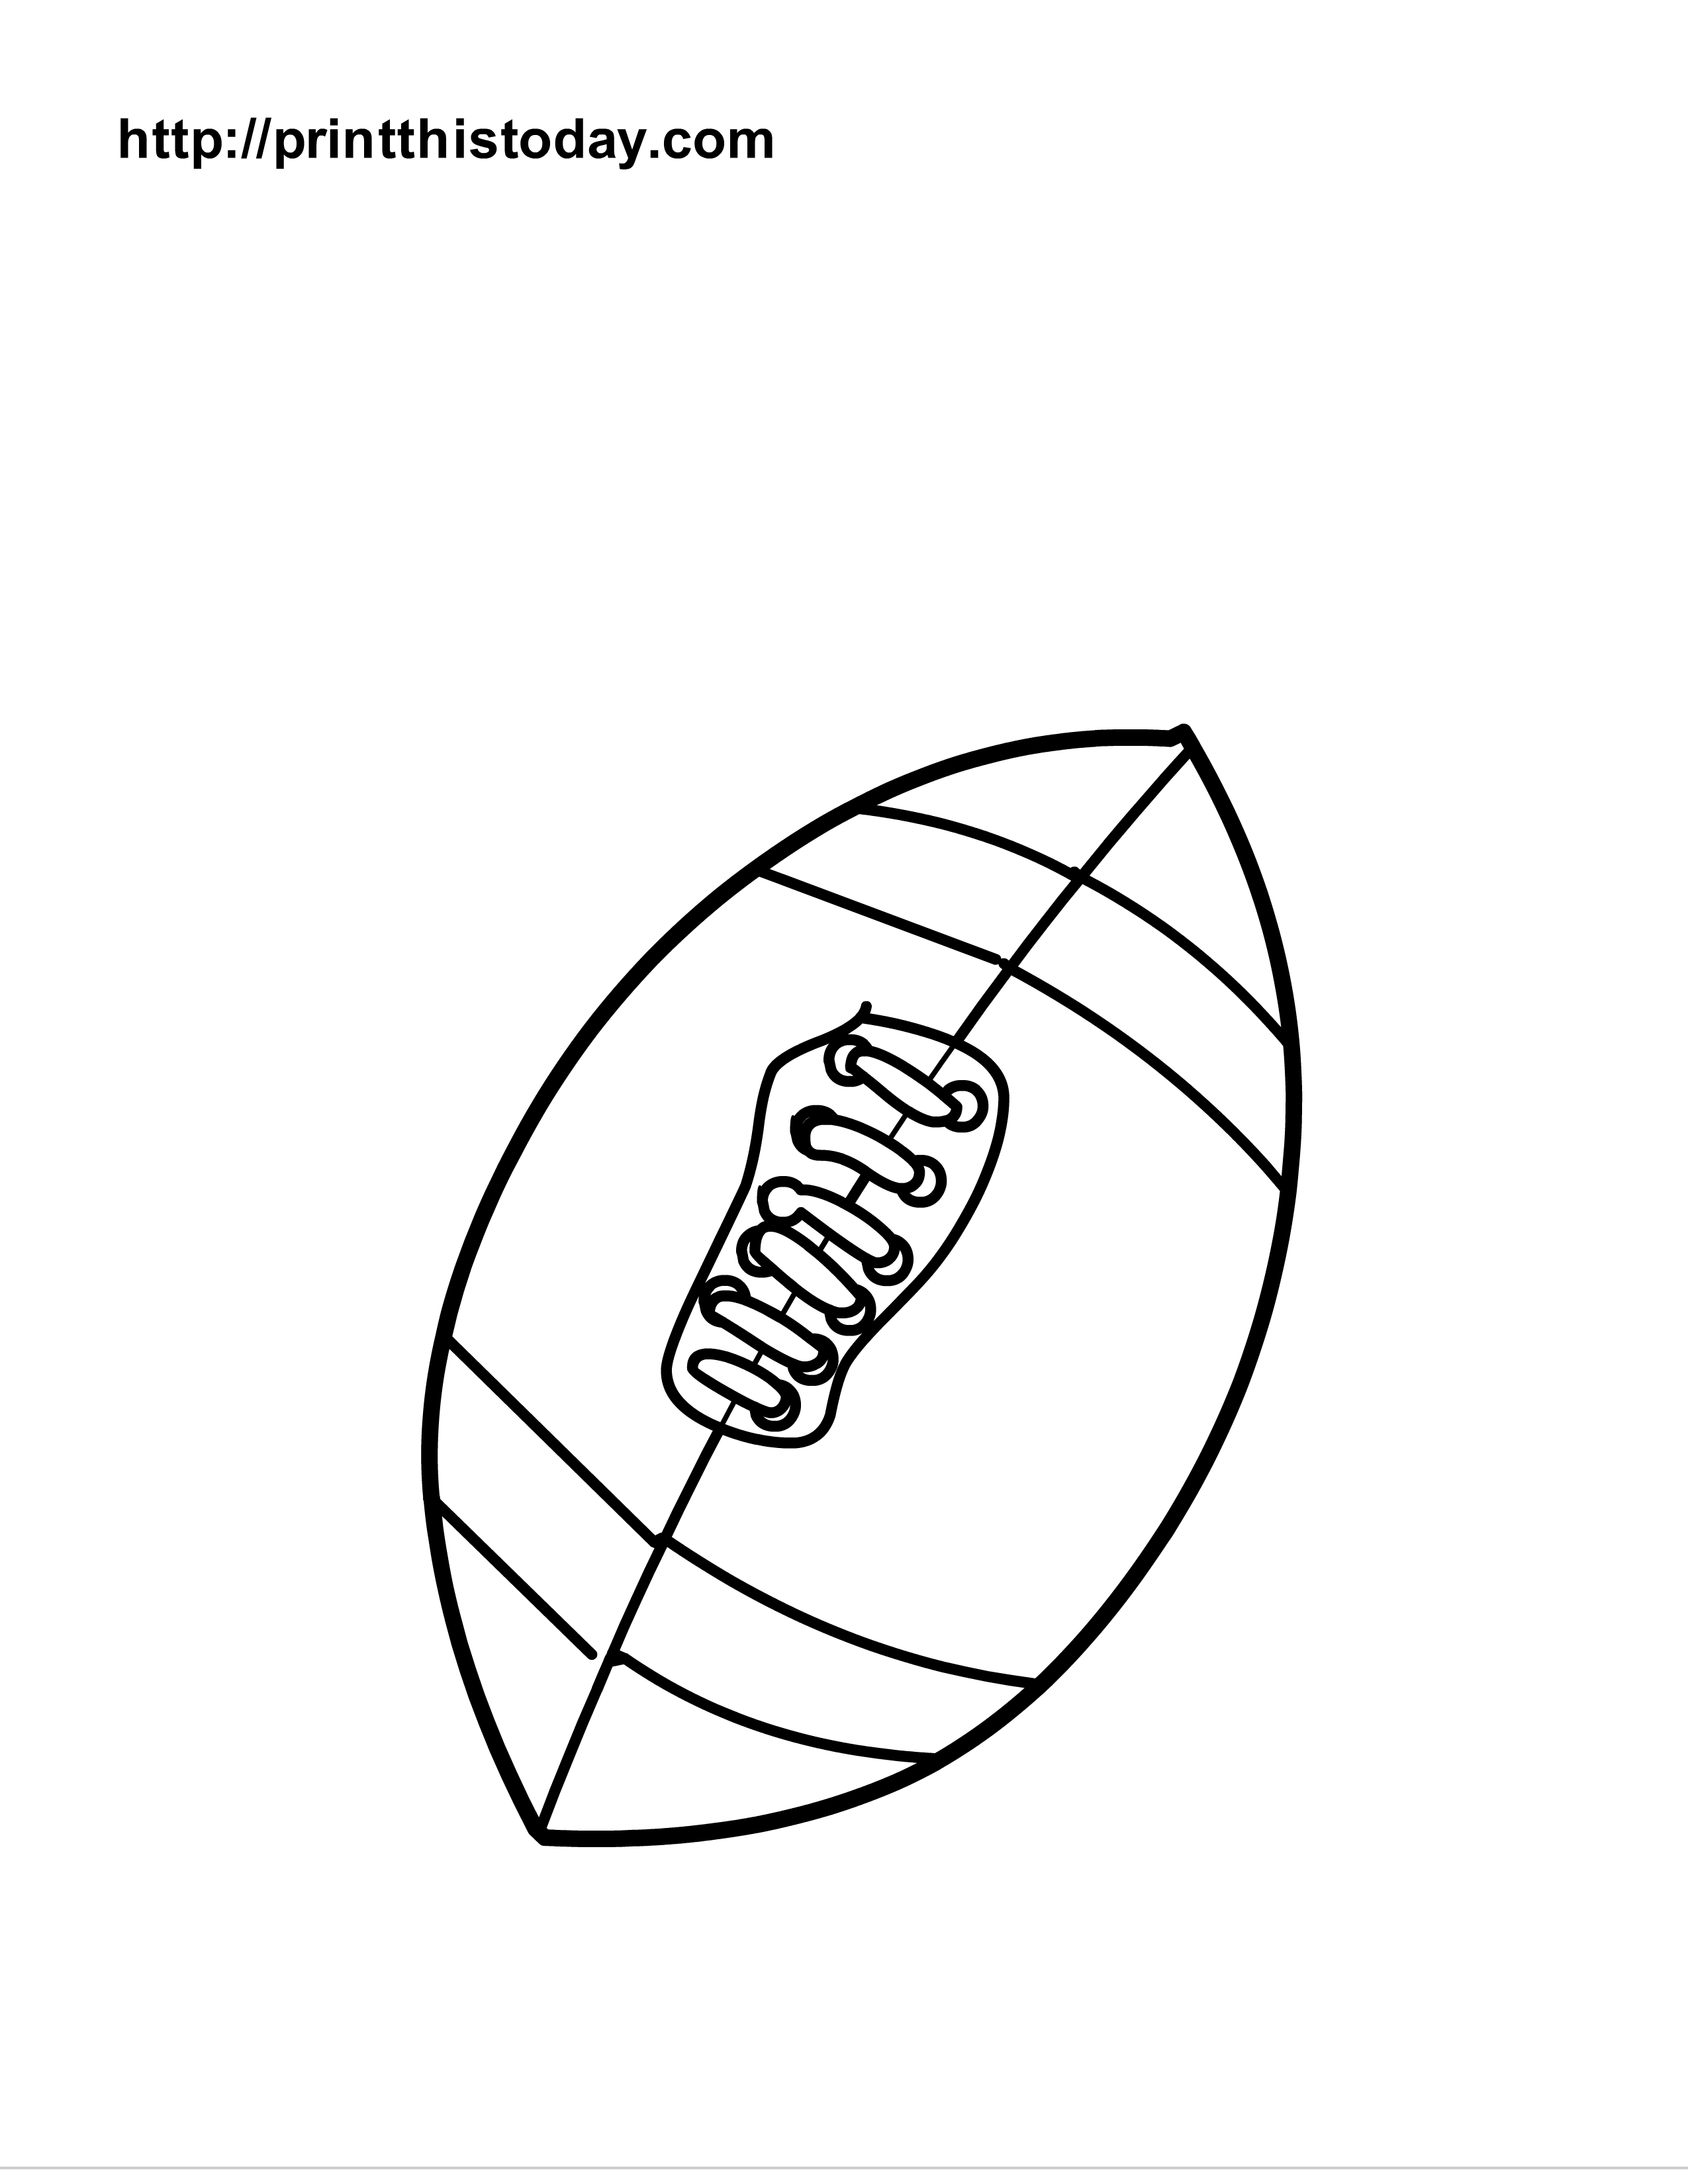 Free Printable Footballs, Download Free Printable Footballs png images